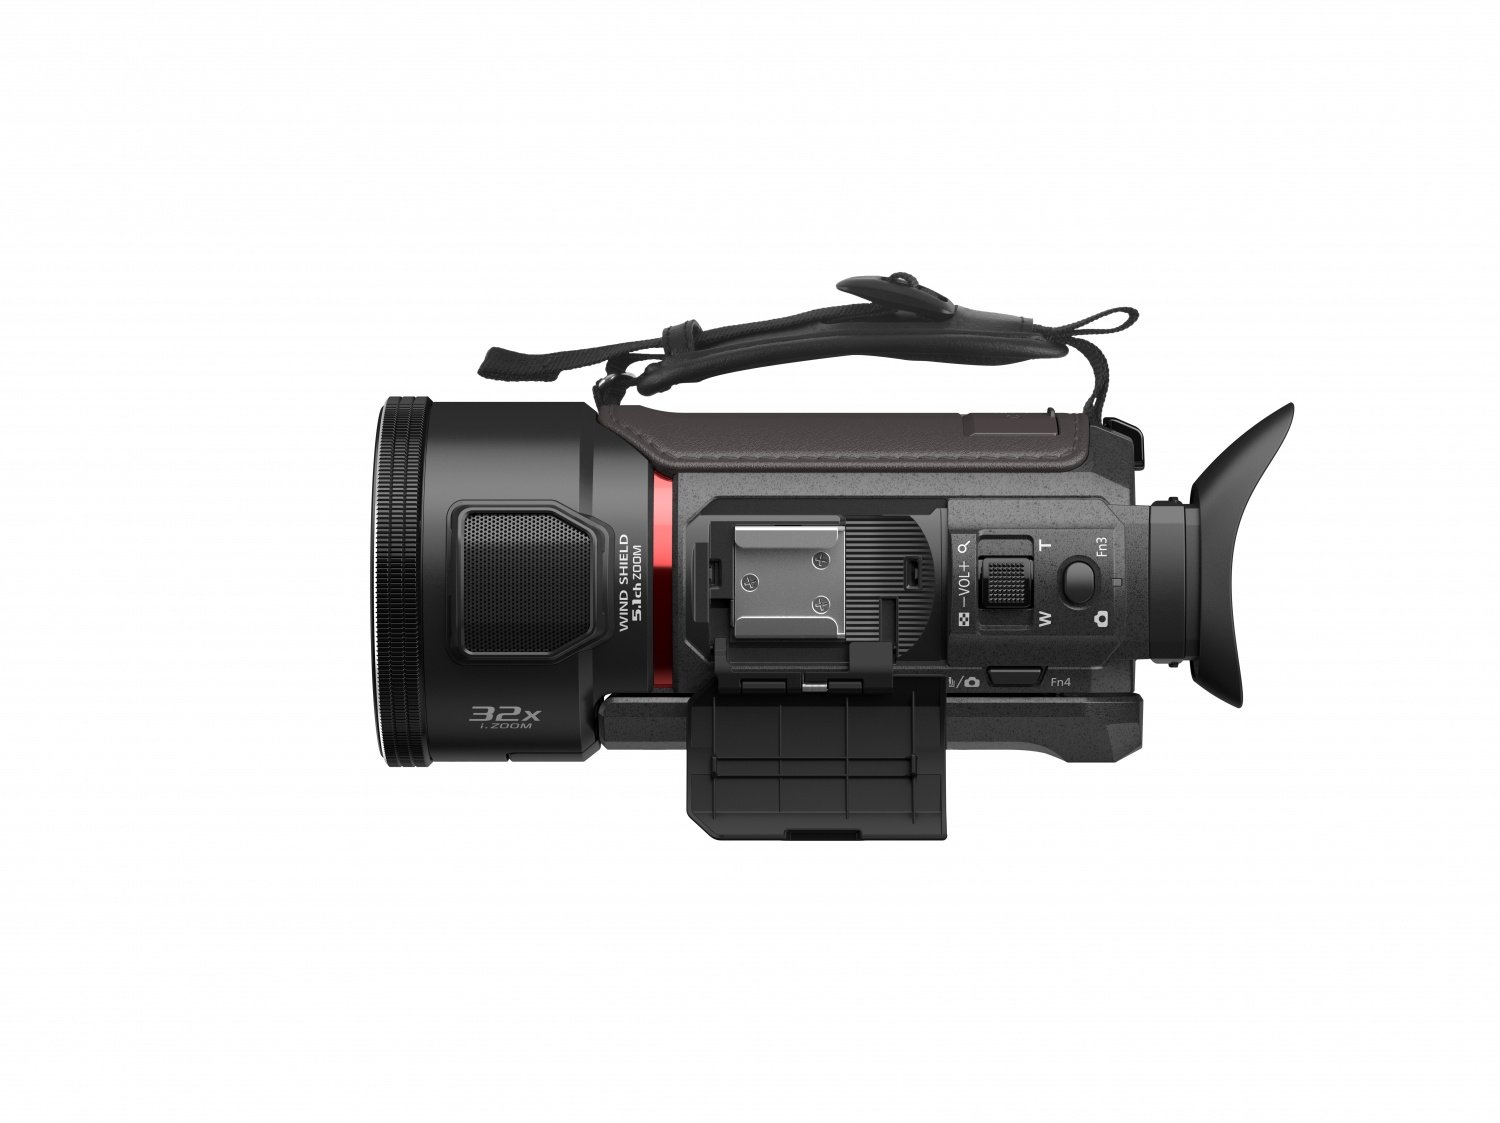 Видеокамера PANASONIC HC-VXF1 Black (HC-VXF1EE-K) фото 